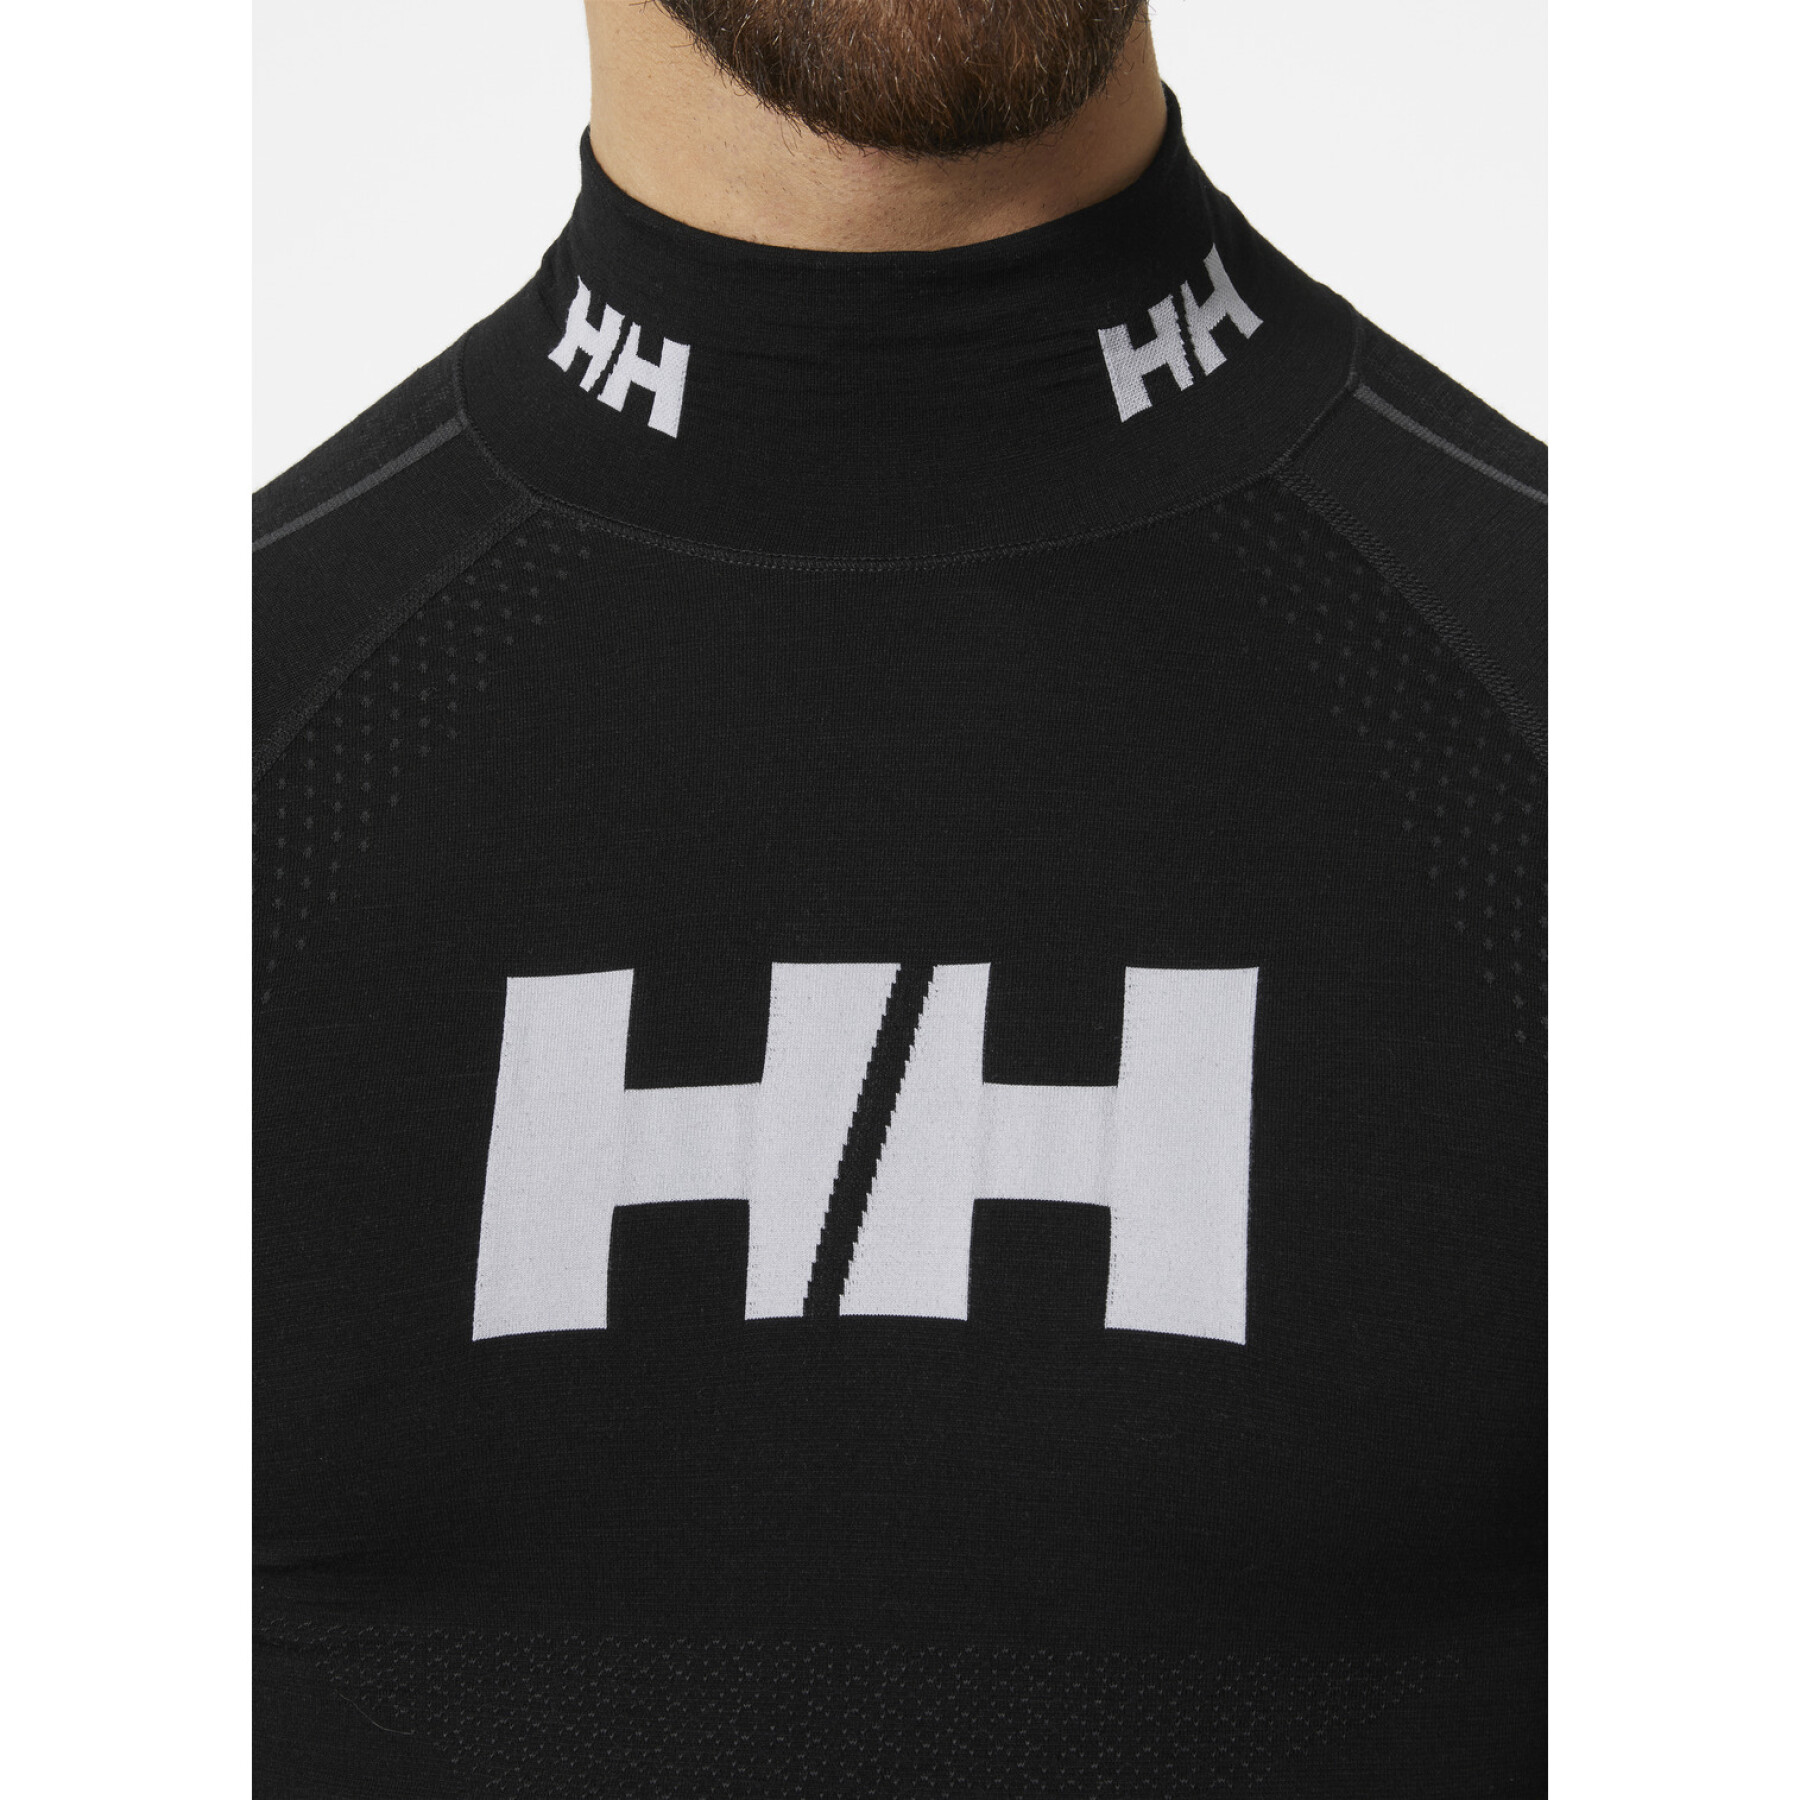 Bluza Helly Hansen h1 pro lifa merino race top